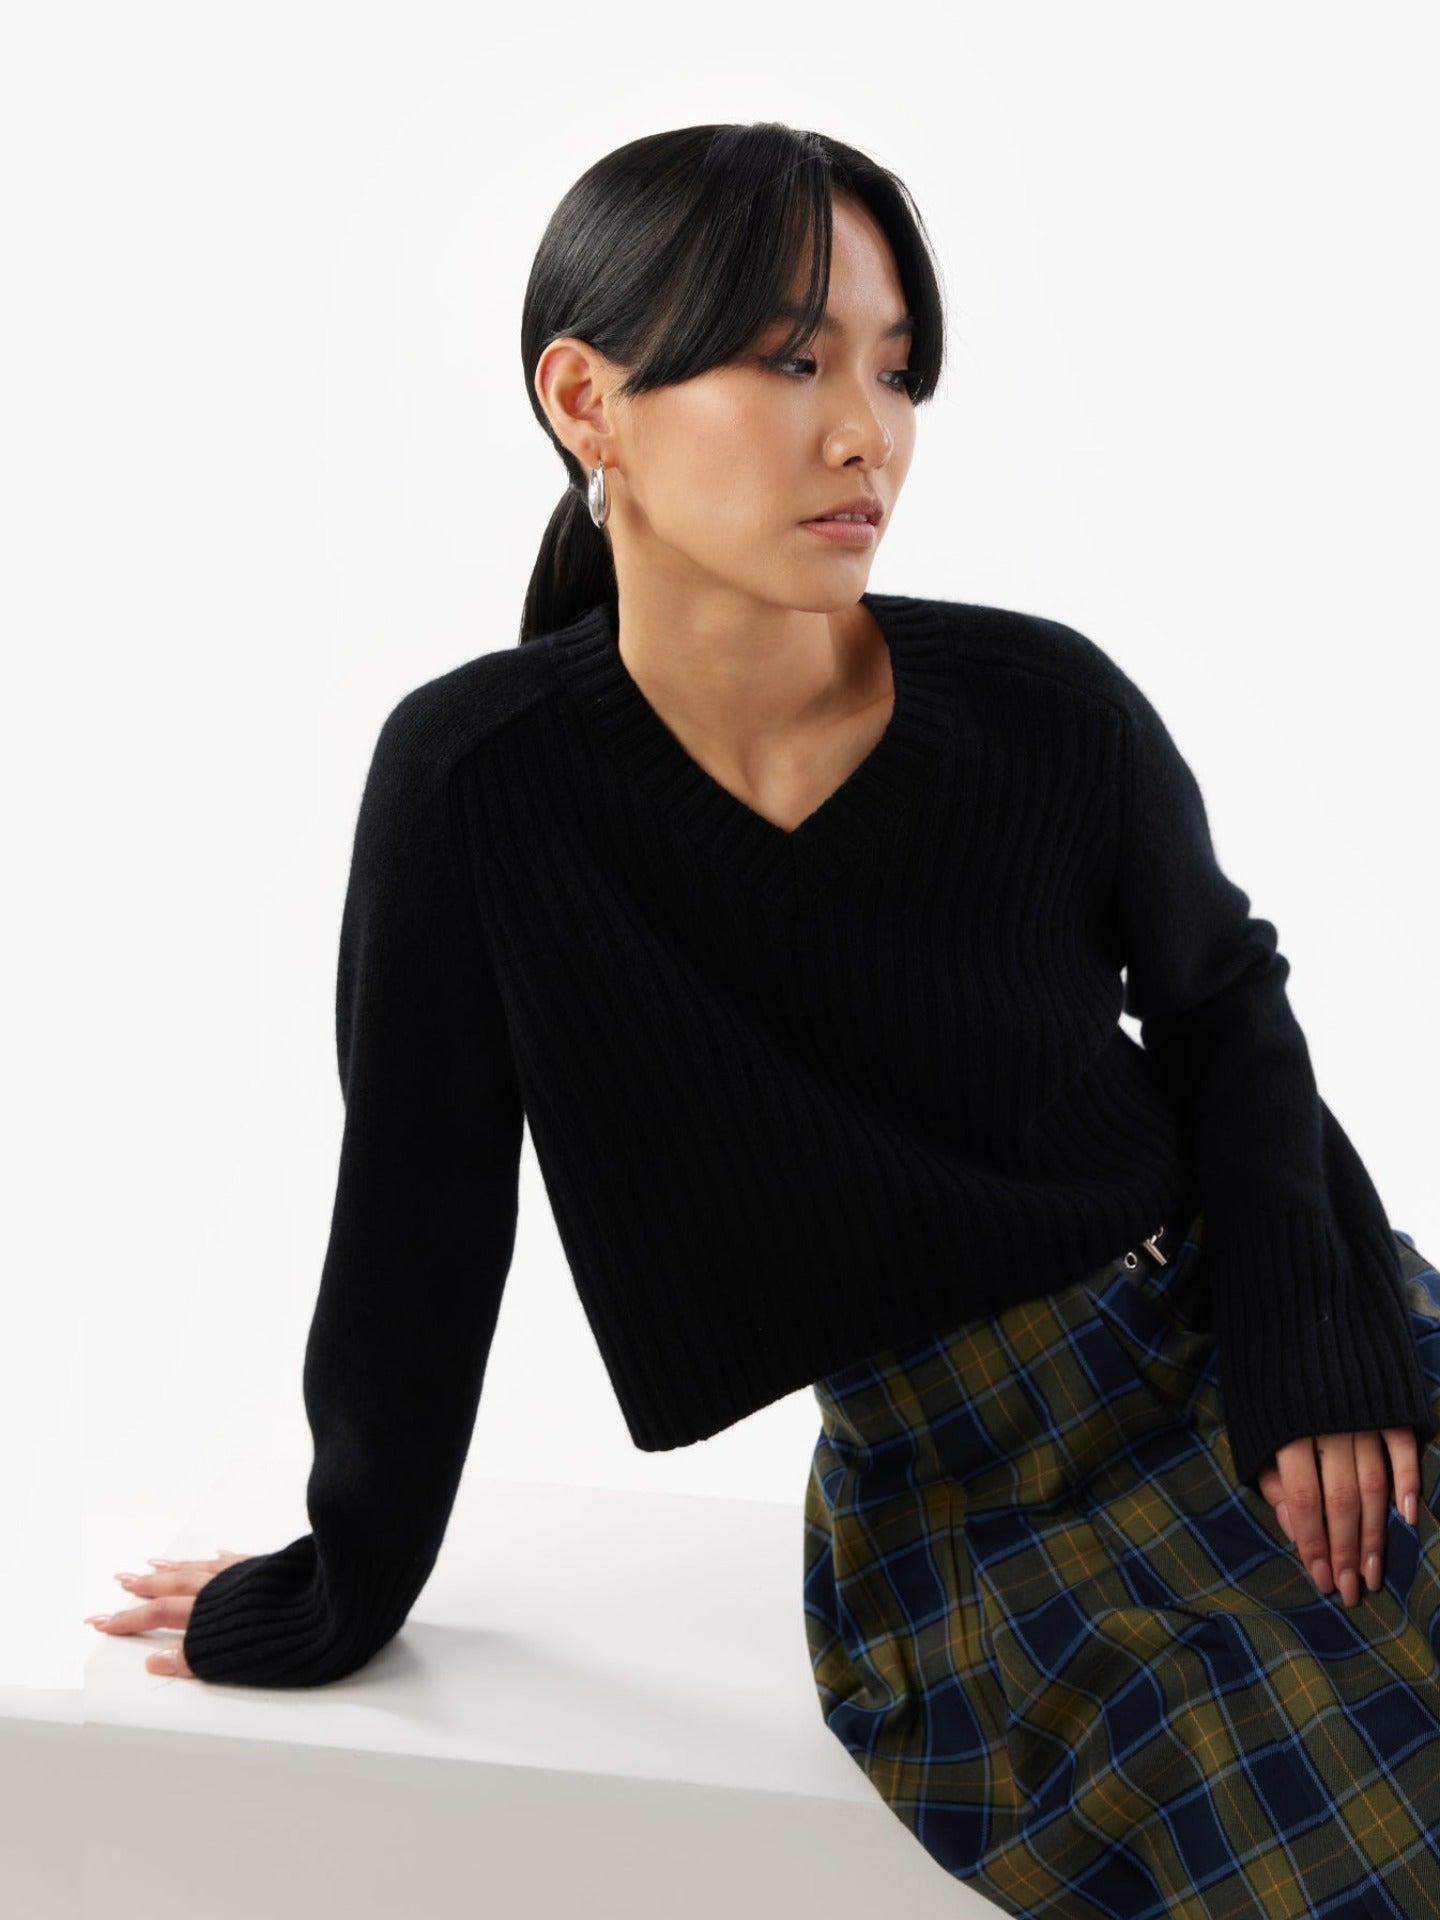 Women's Cashmere Rib Knitted V-Neck Sweater Black - Gobi Cashmere